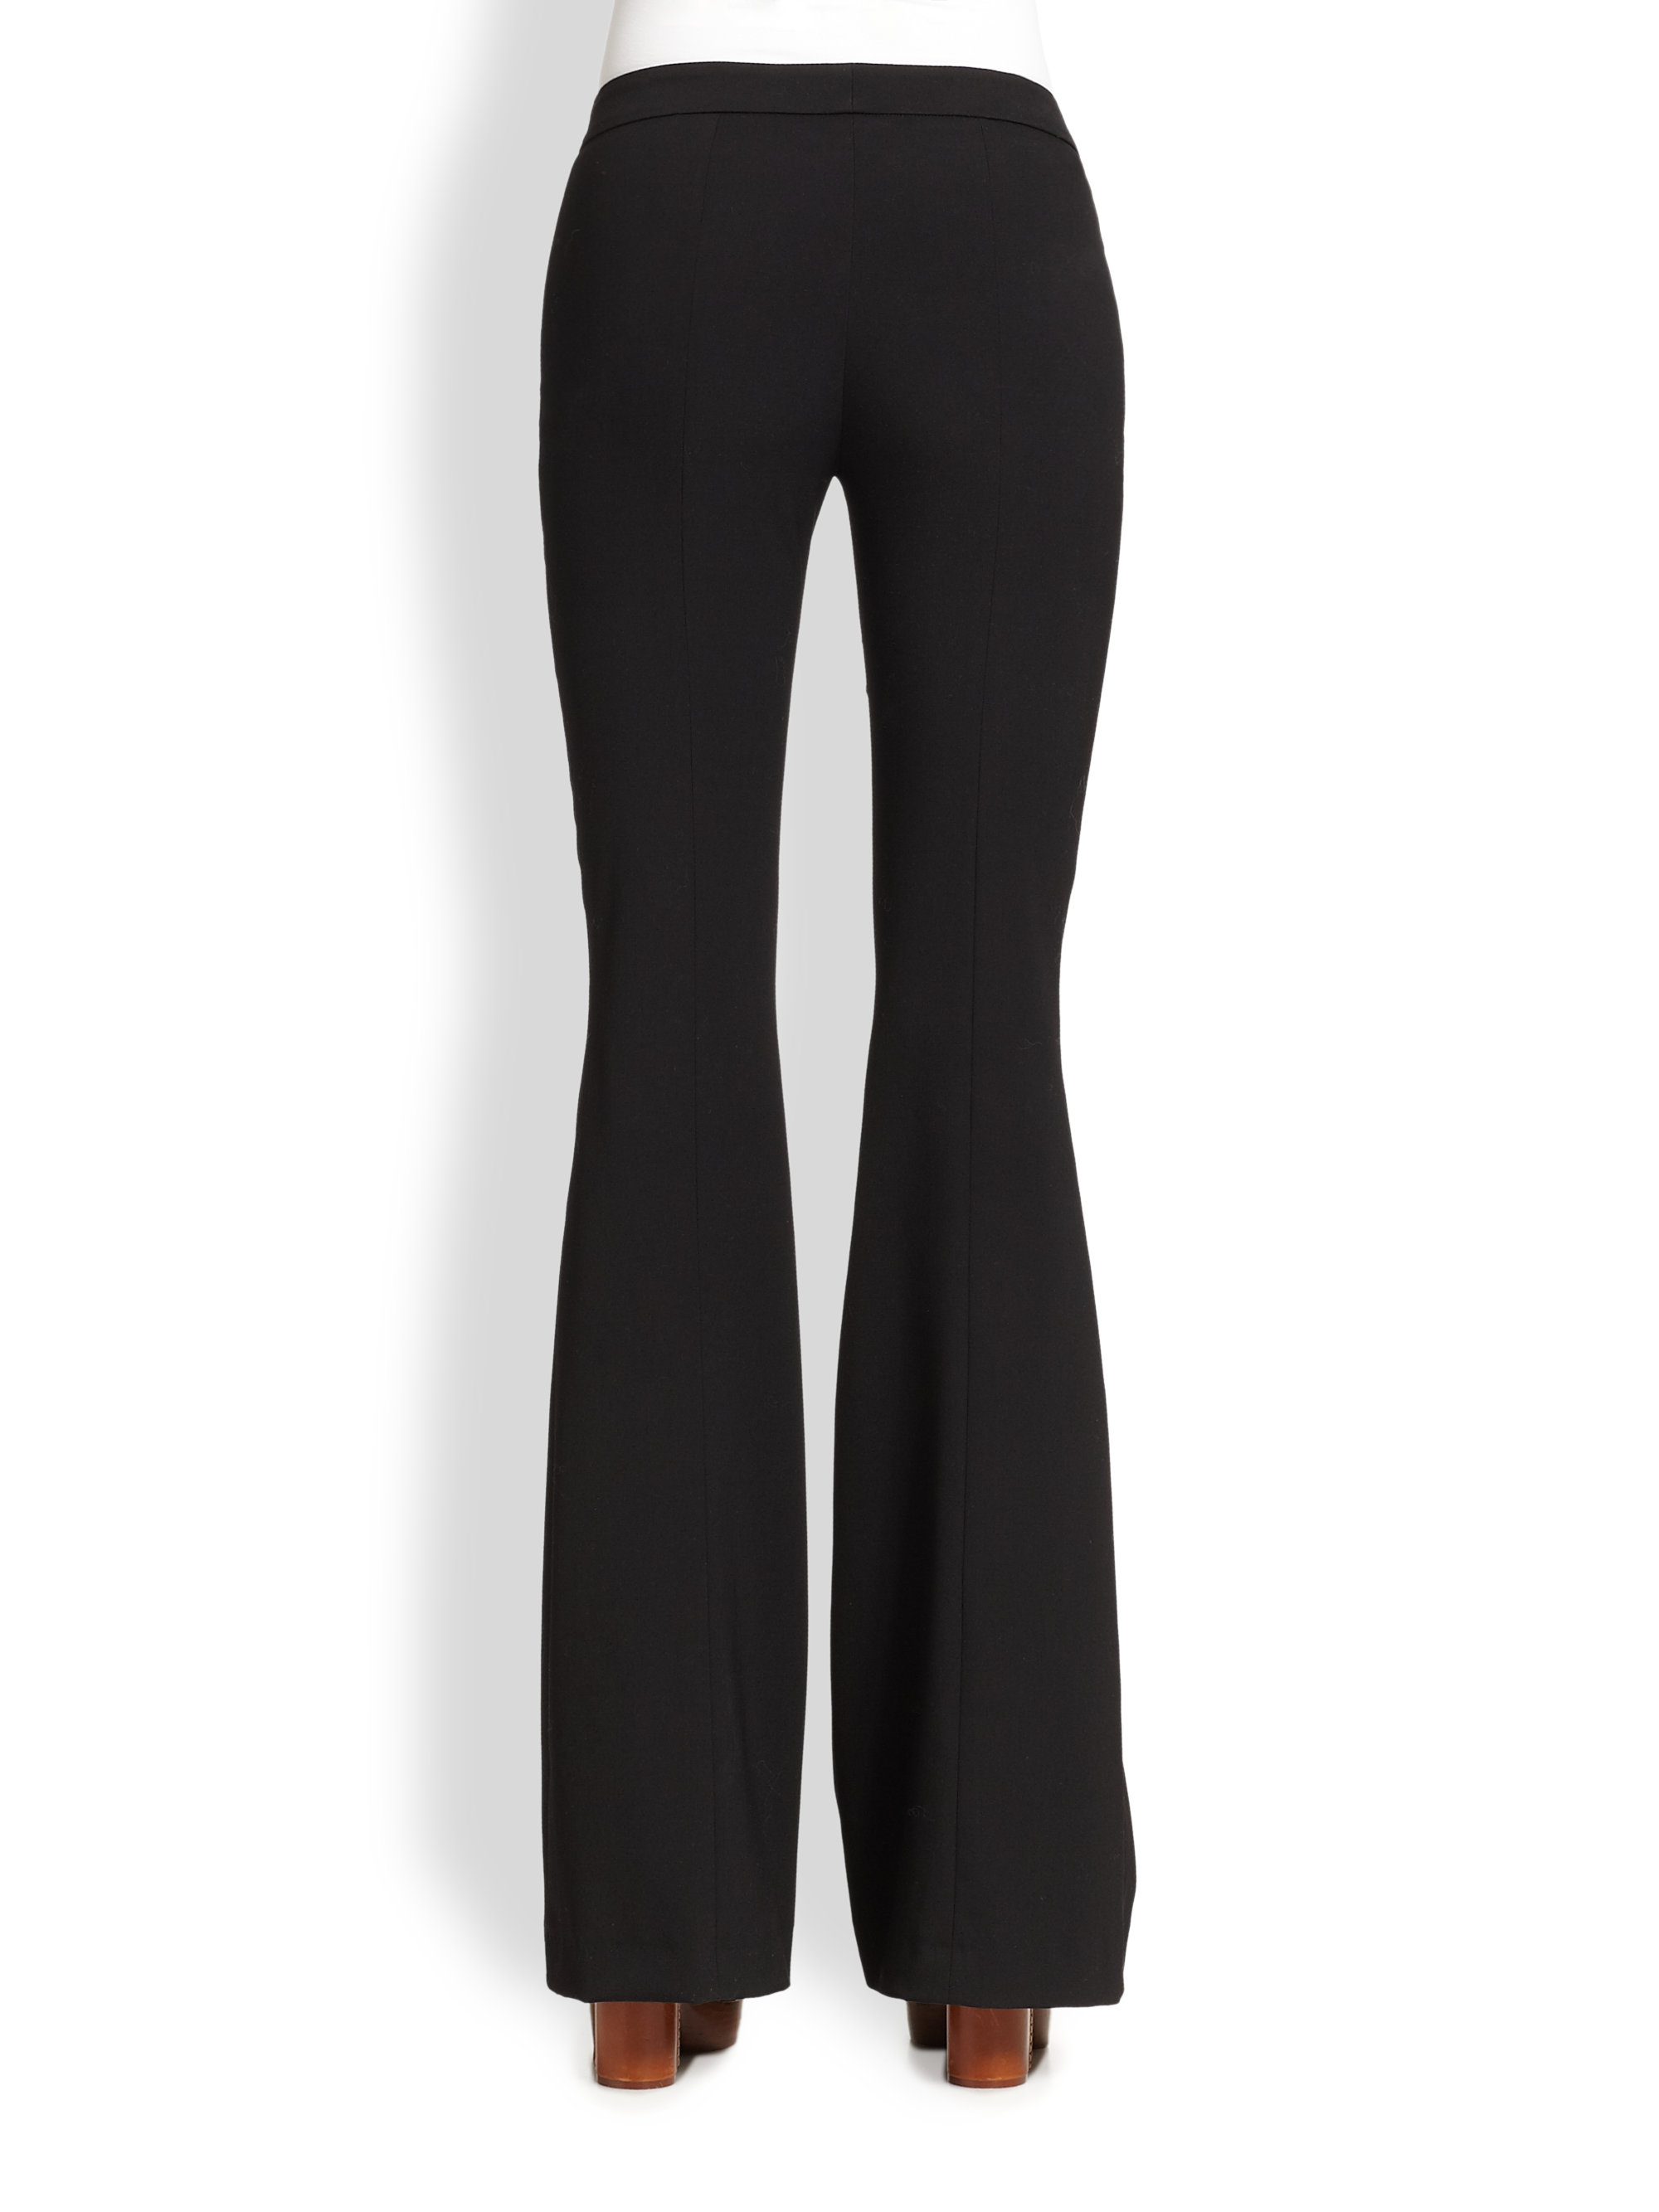 Lyst - Michael Kors Wool Gabardine Bootleg Pants in Black